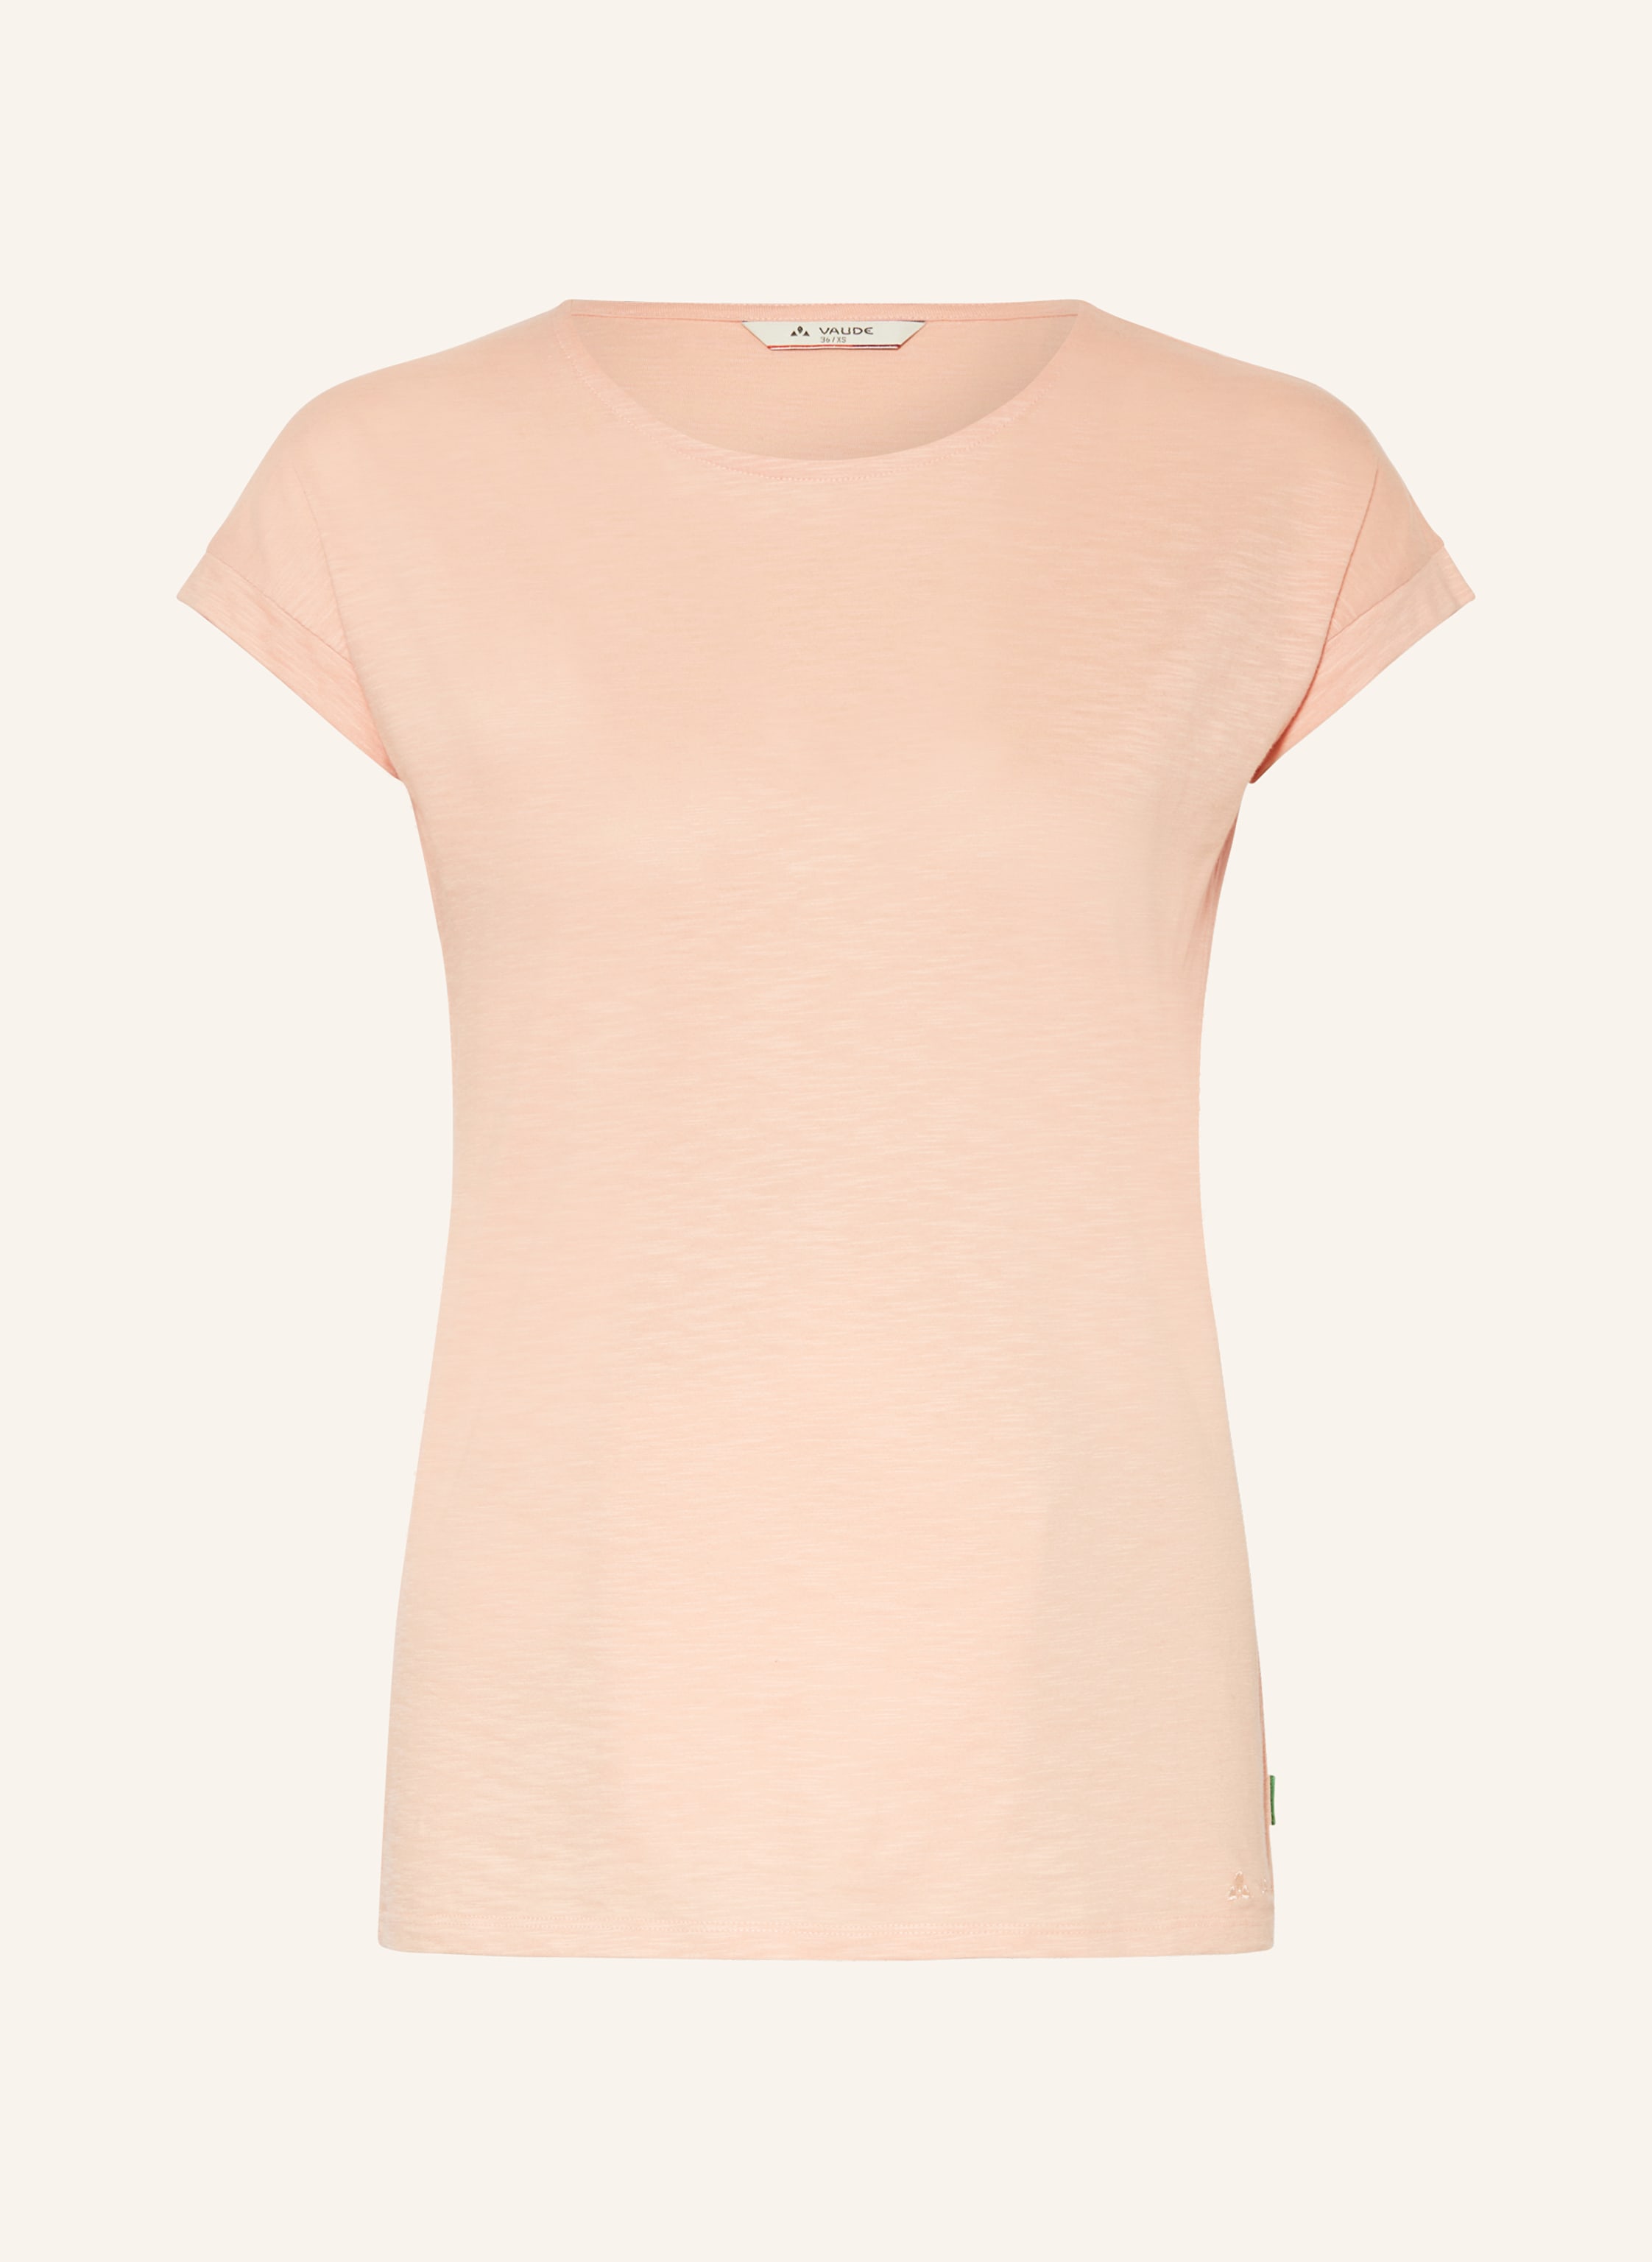 Vaude Moja T-Shirt IV - T-shirt Women's, Buy online